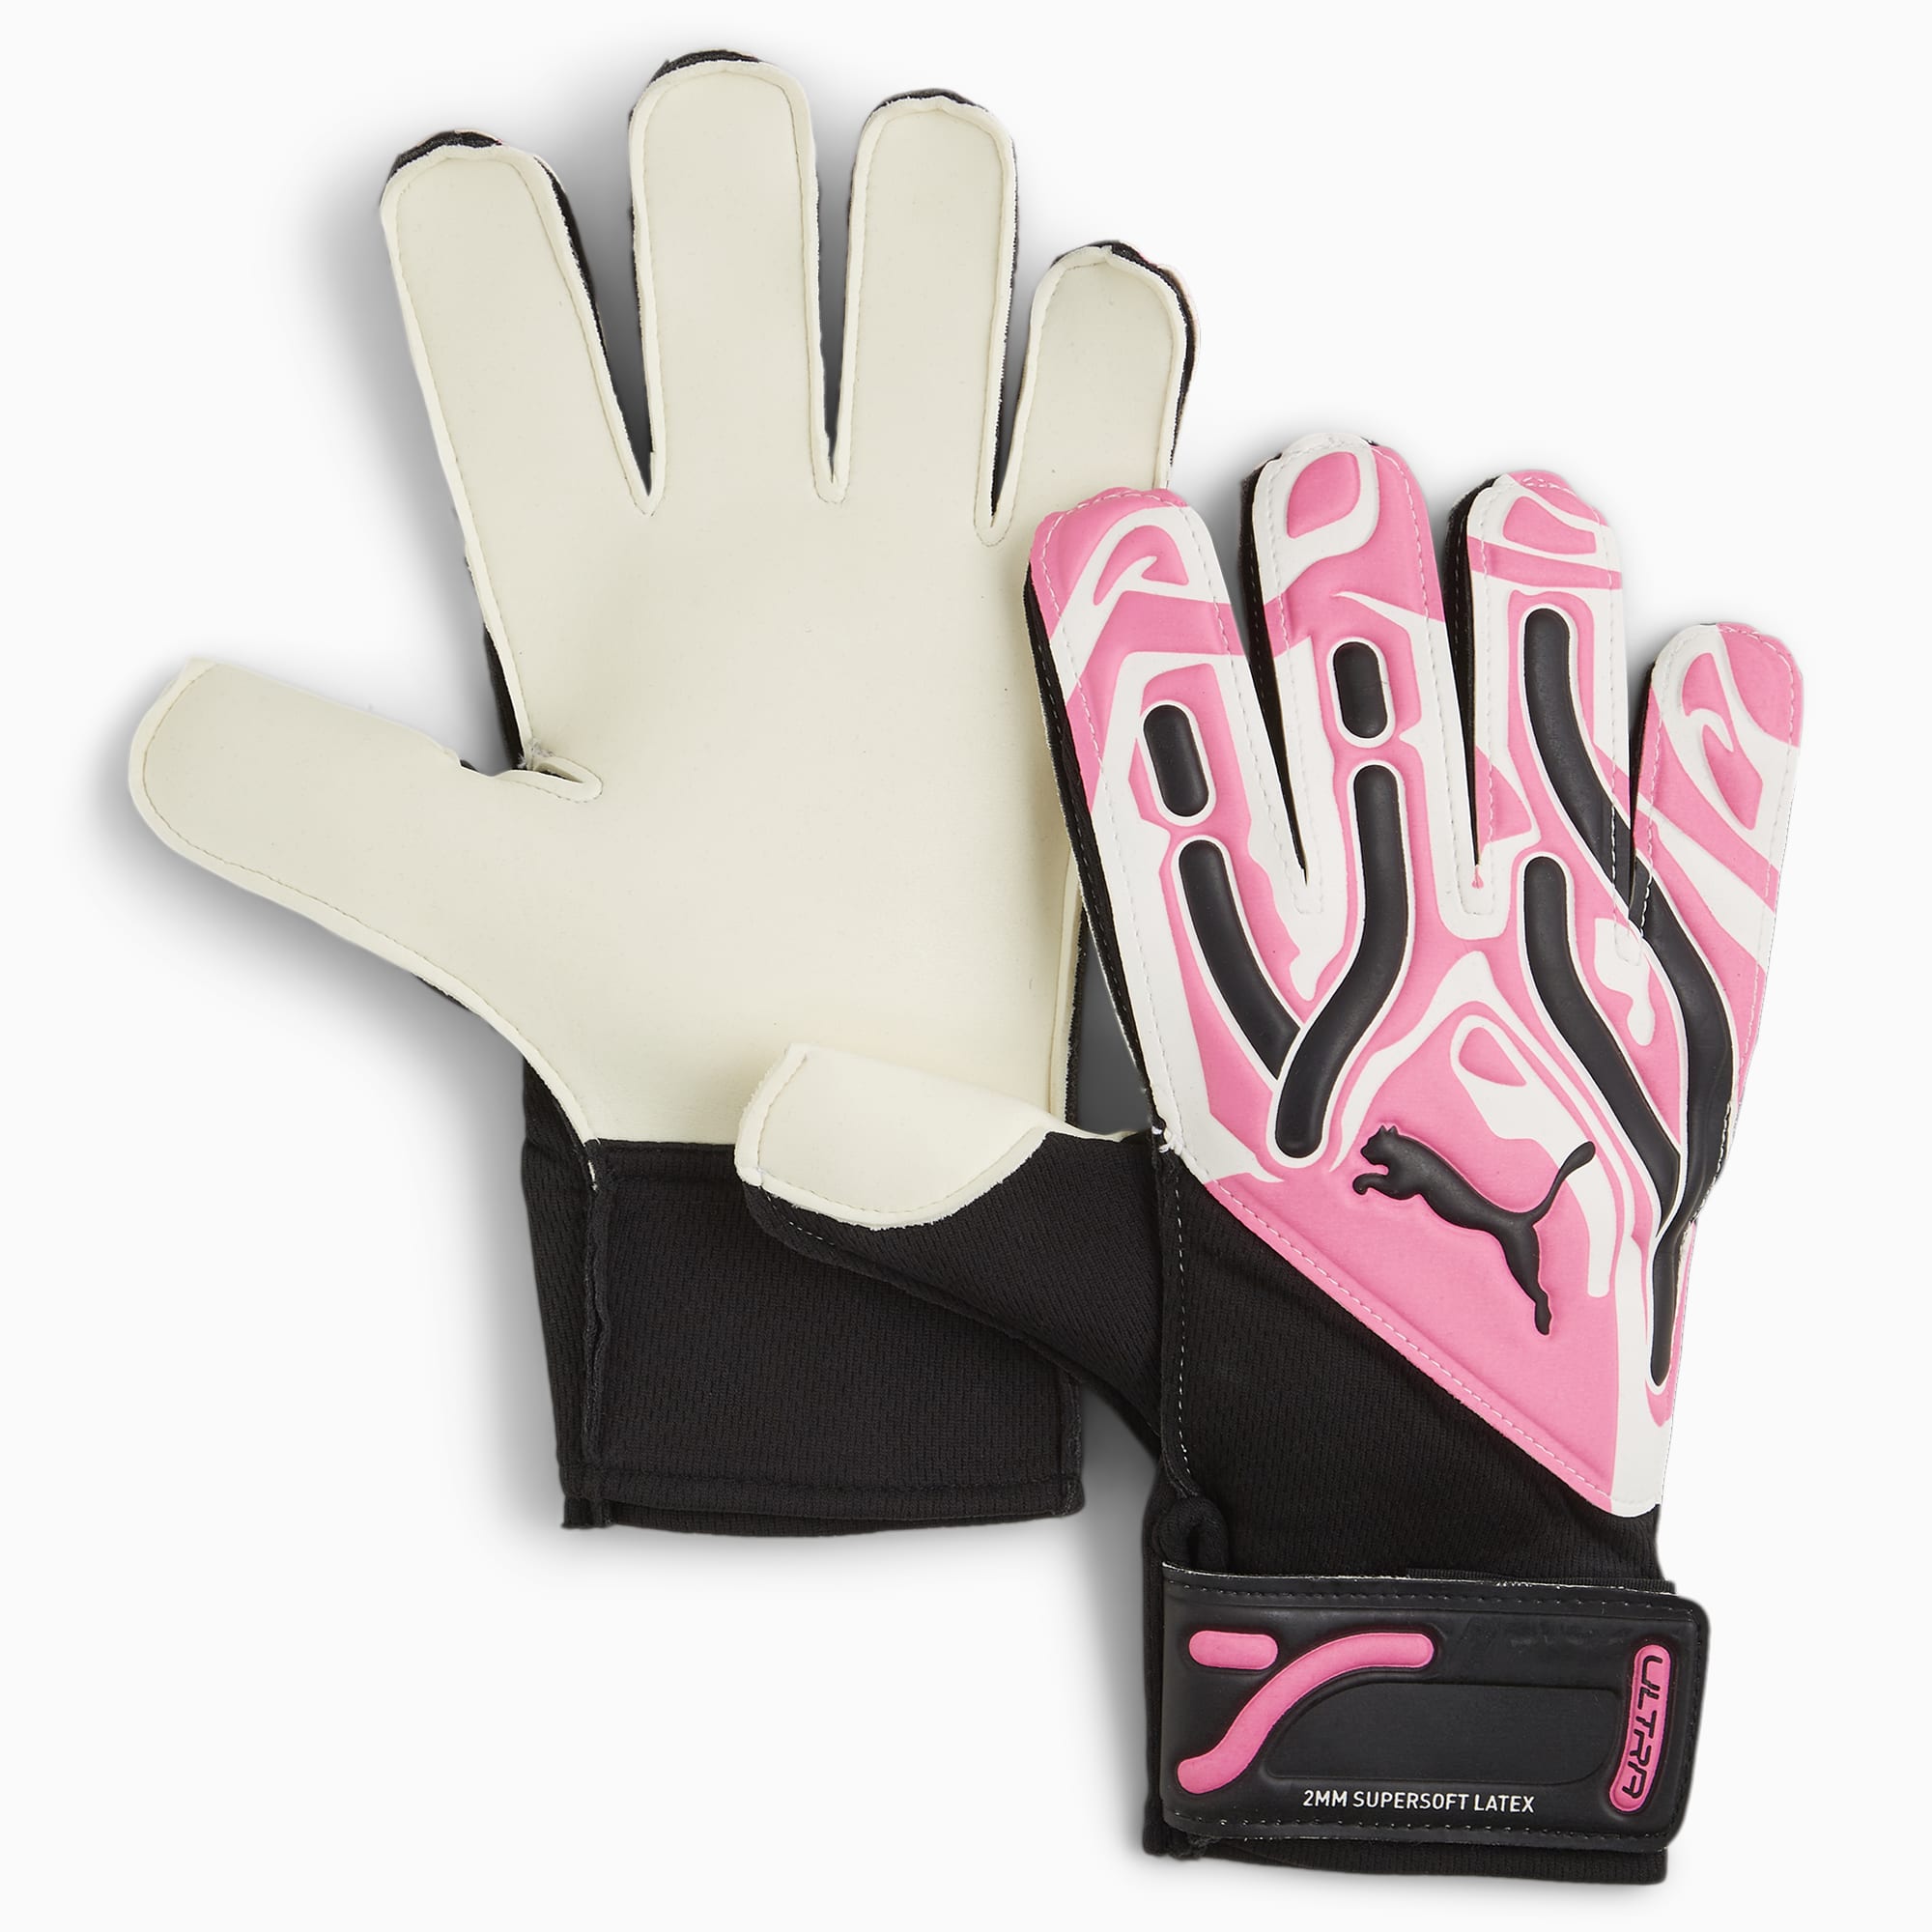 Puma Ultra Play Pink White - Keepershandschoenen - Maat 4